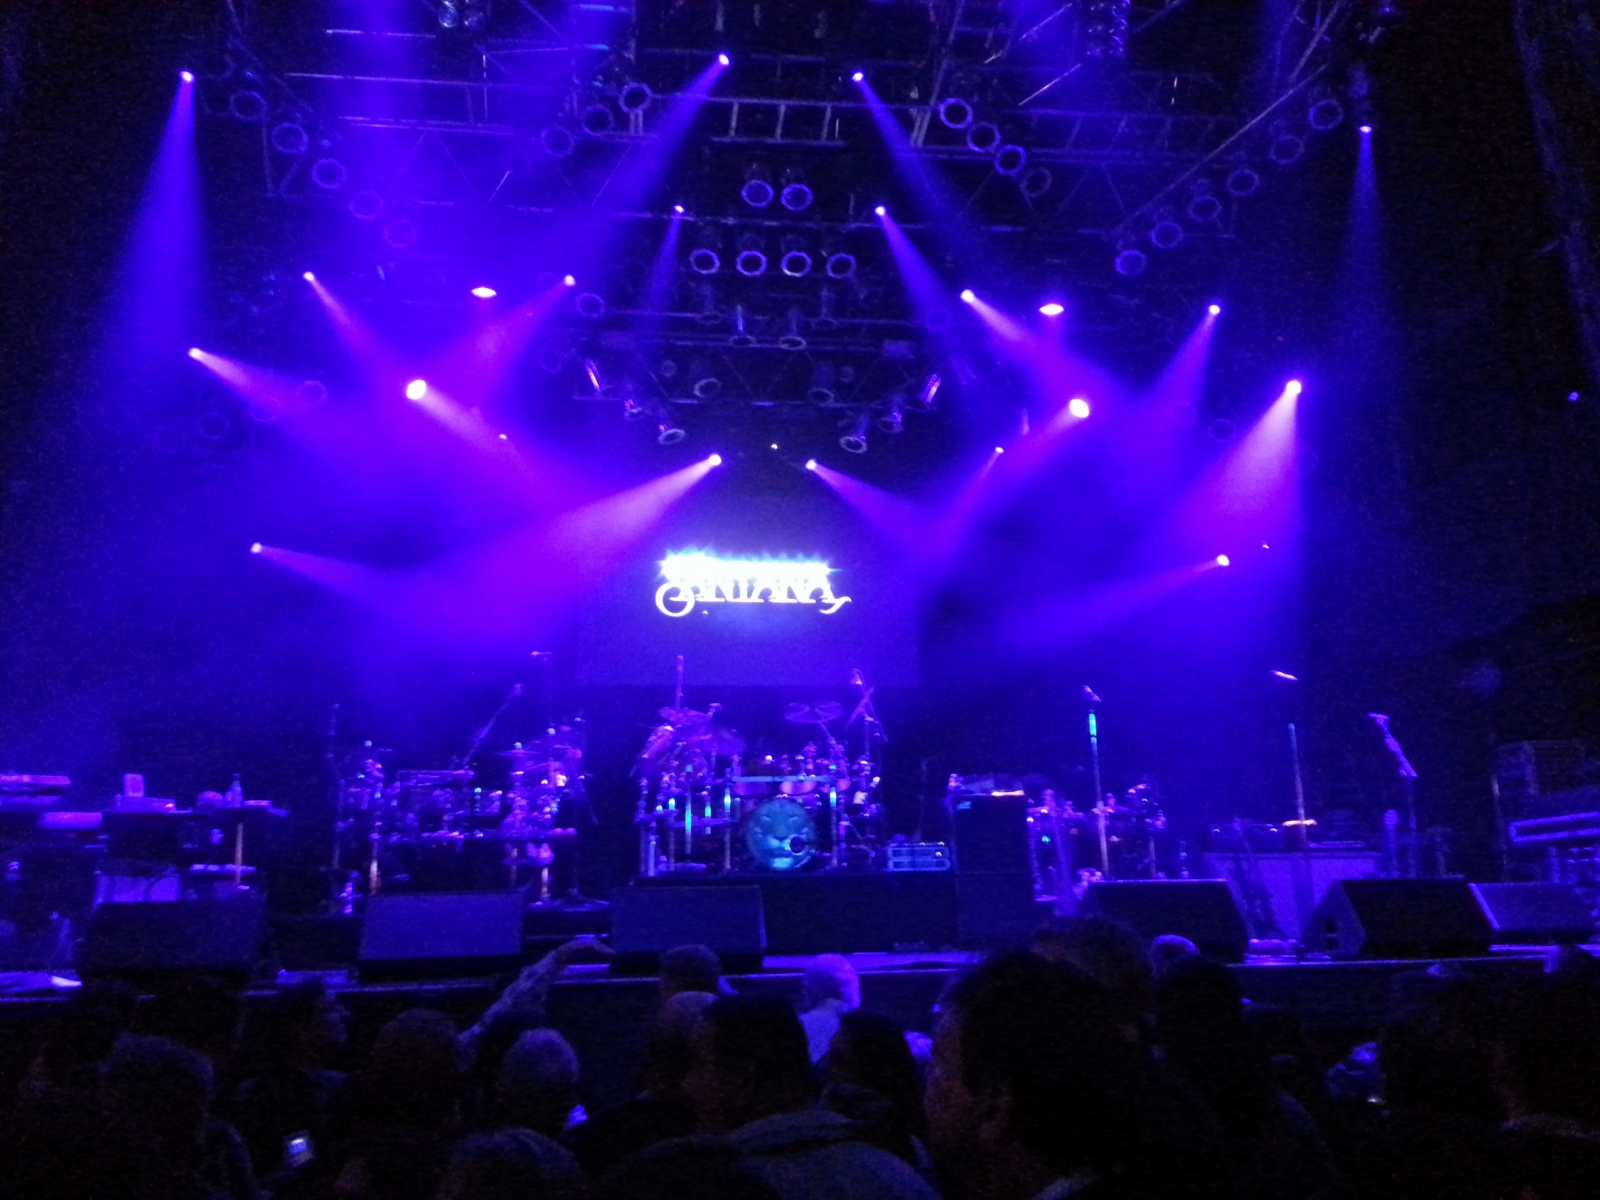 Santana stage, opening night, House of Blues, Vegas